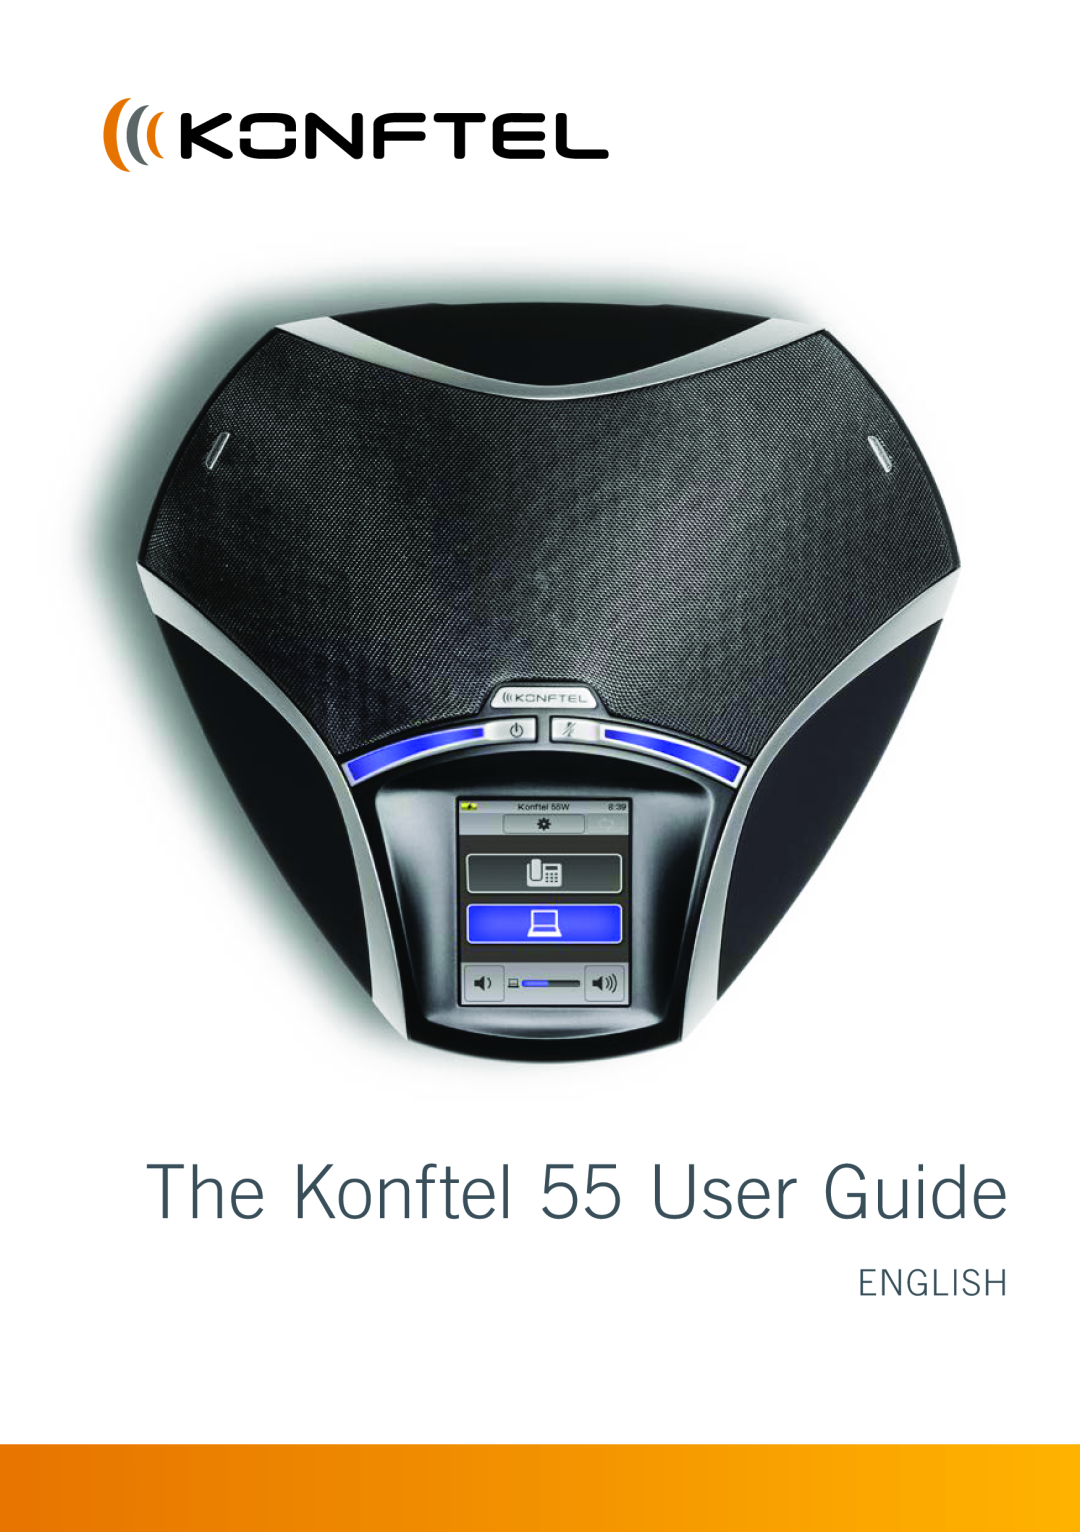 Konftel manual The Konftel 55 User Guide, English 